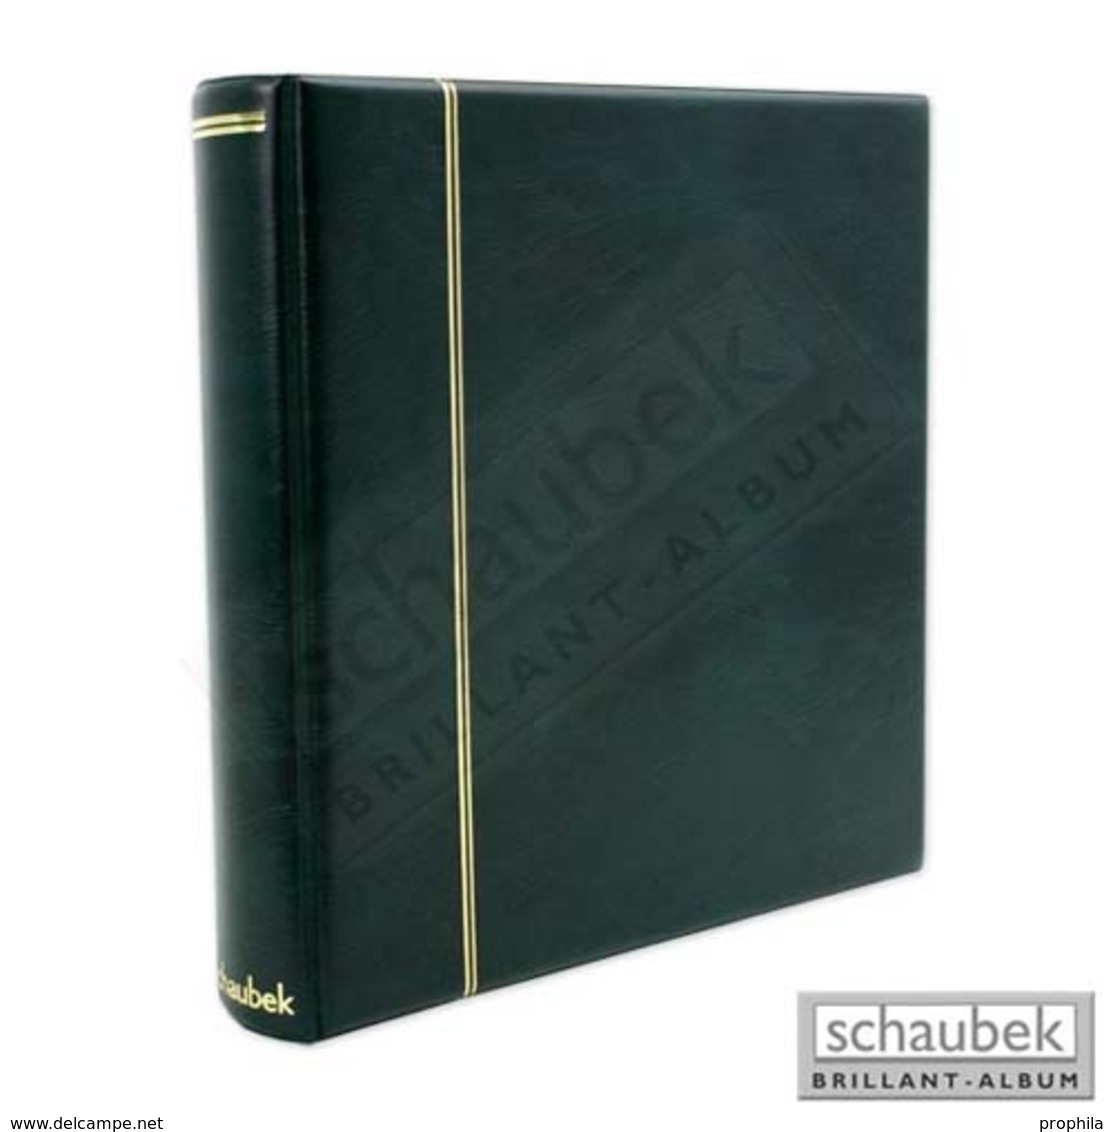 Schaubek Ringbinder "Senator", Wattierter Kunstlederbinder Grün - Large Format, Black Pages